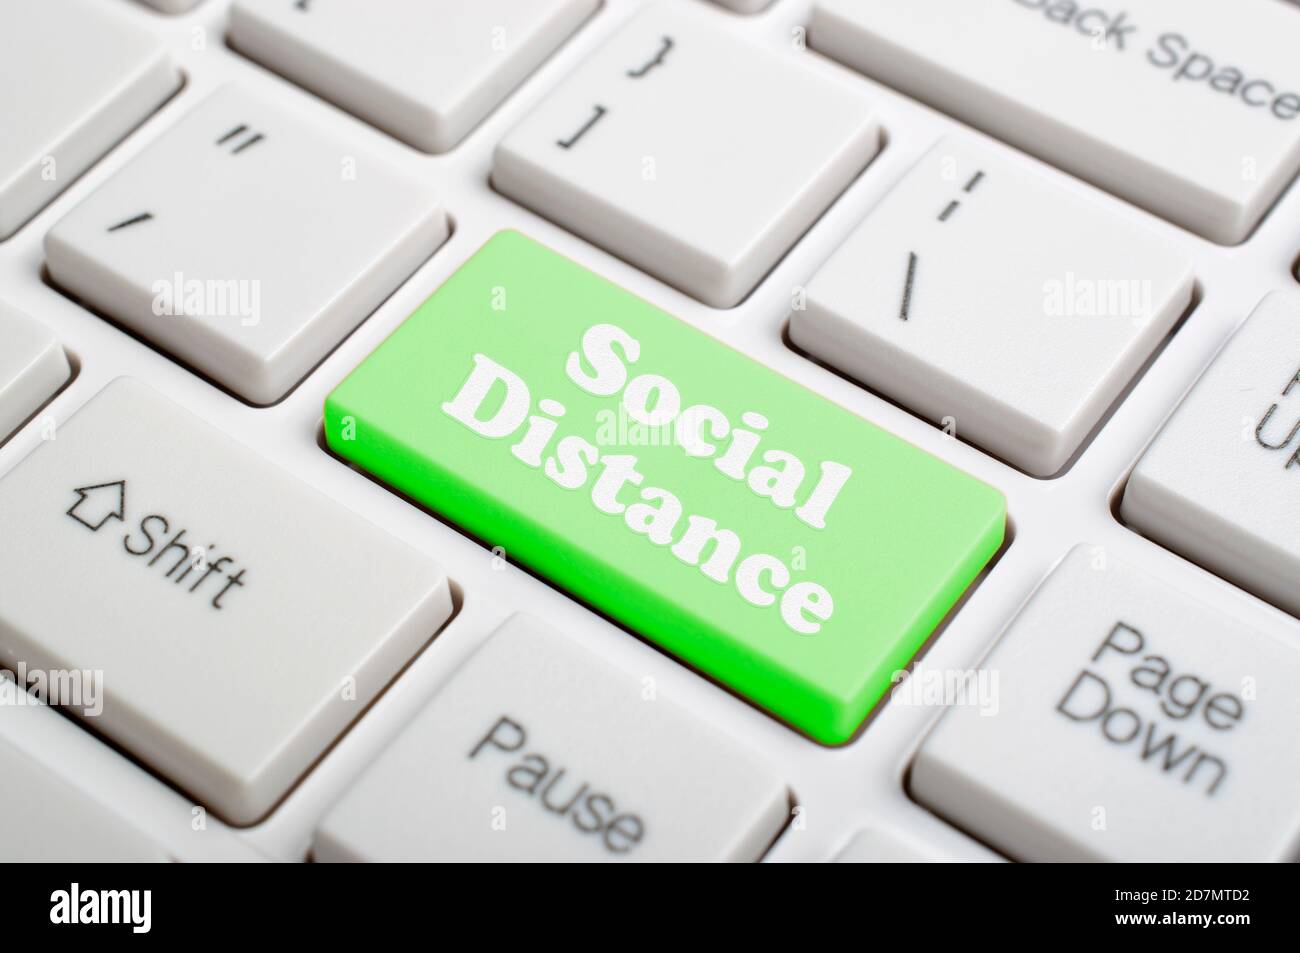 Social distance key on keyboard Stock Photo